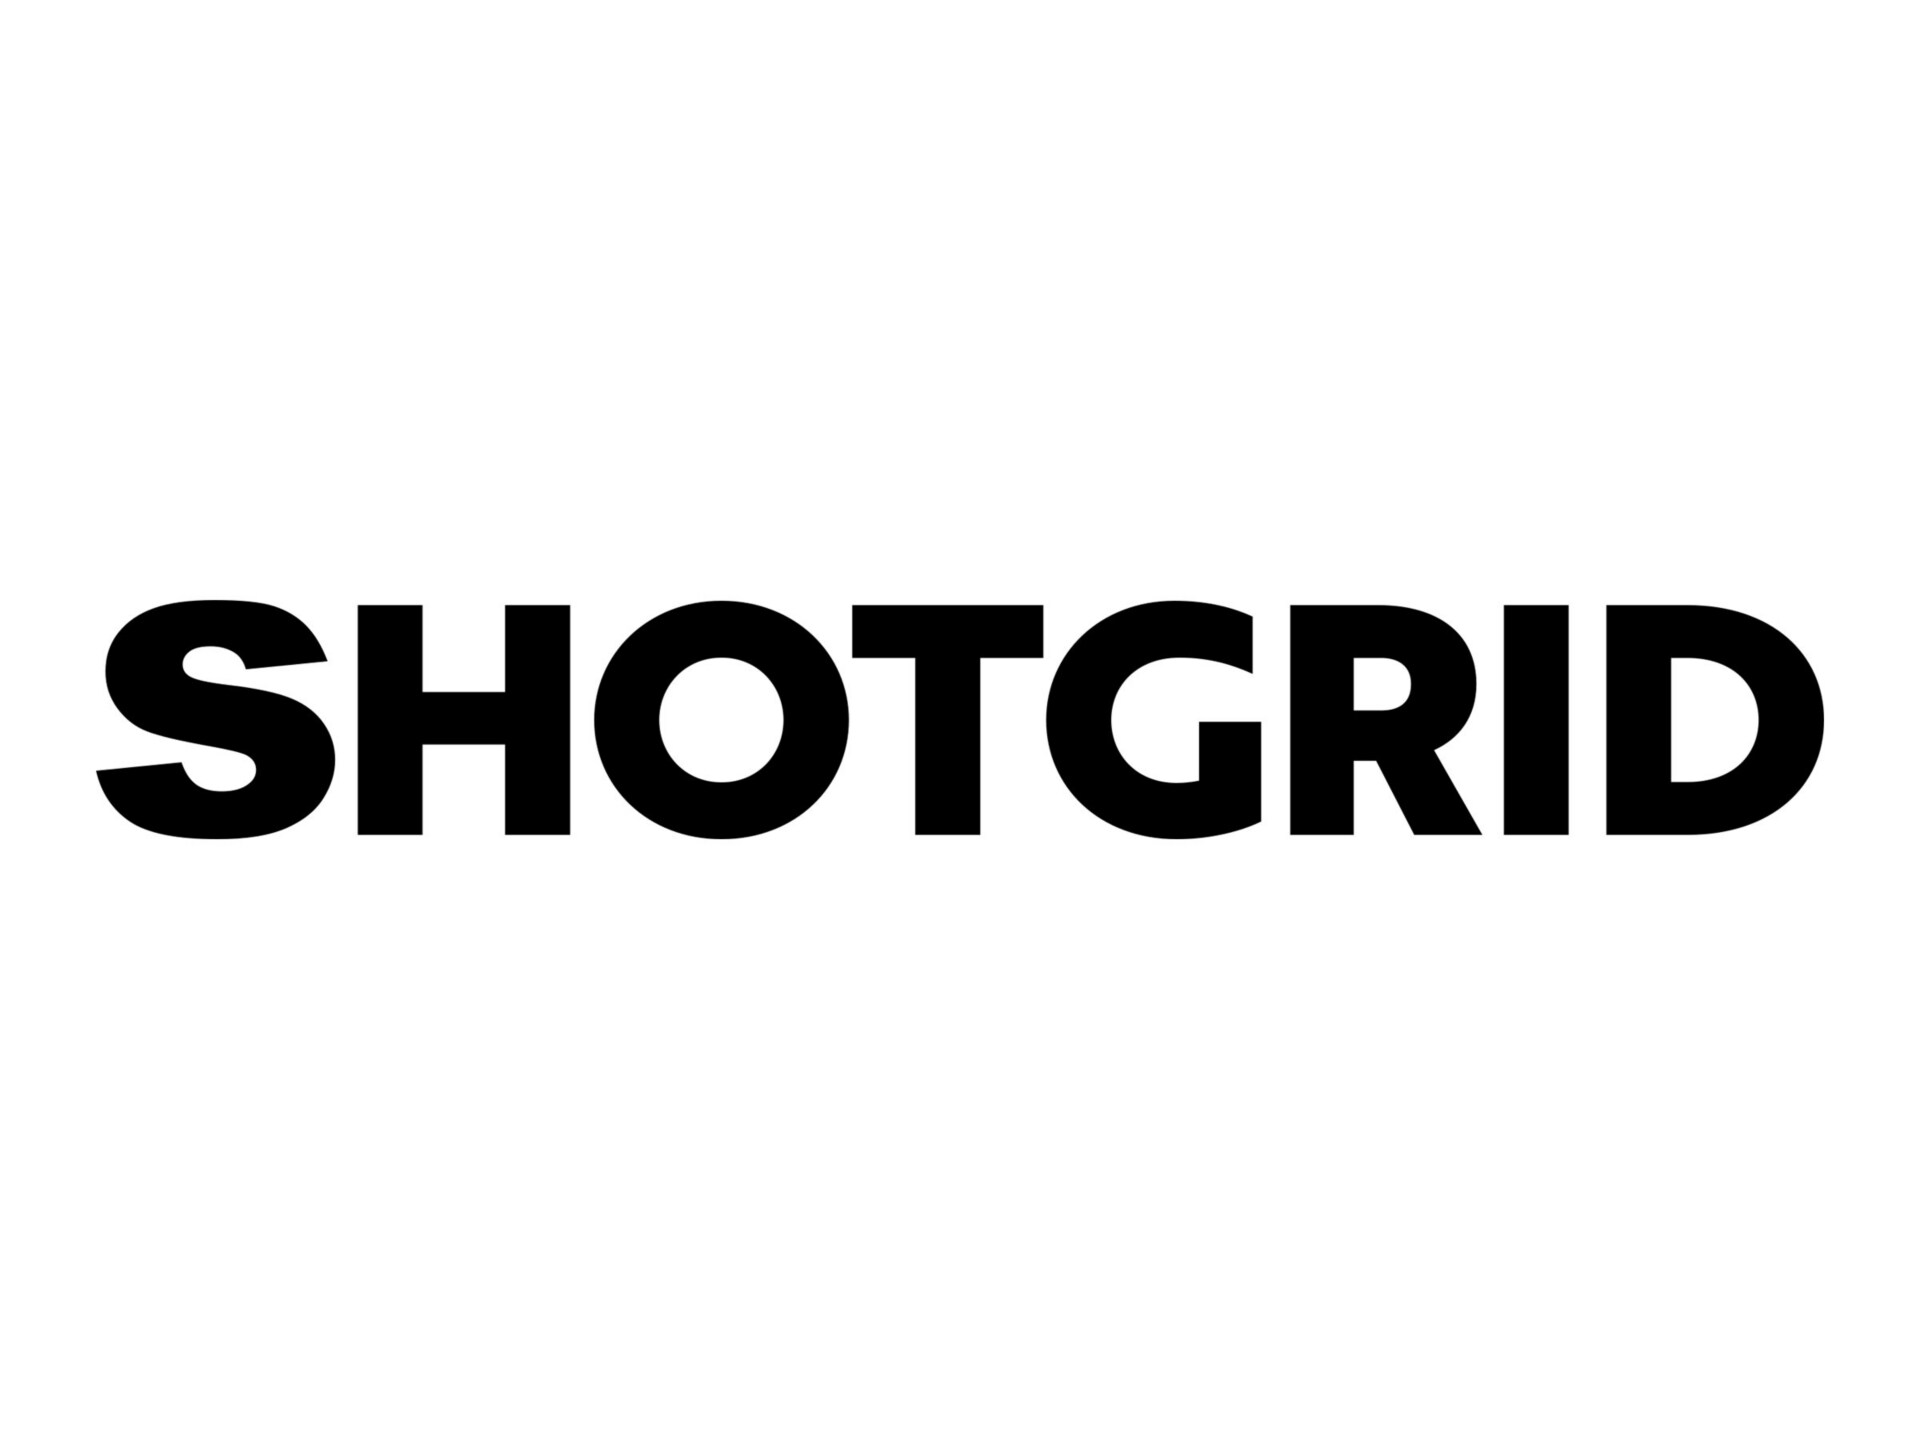 Autodesk ShotGrid - New Subscription (23 months) - 1 seat